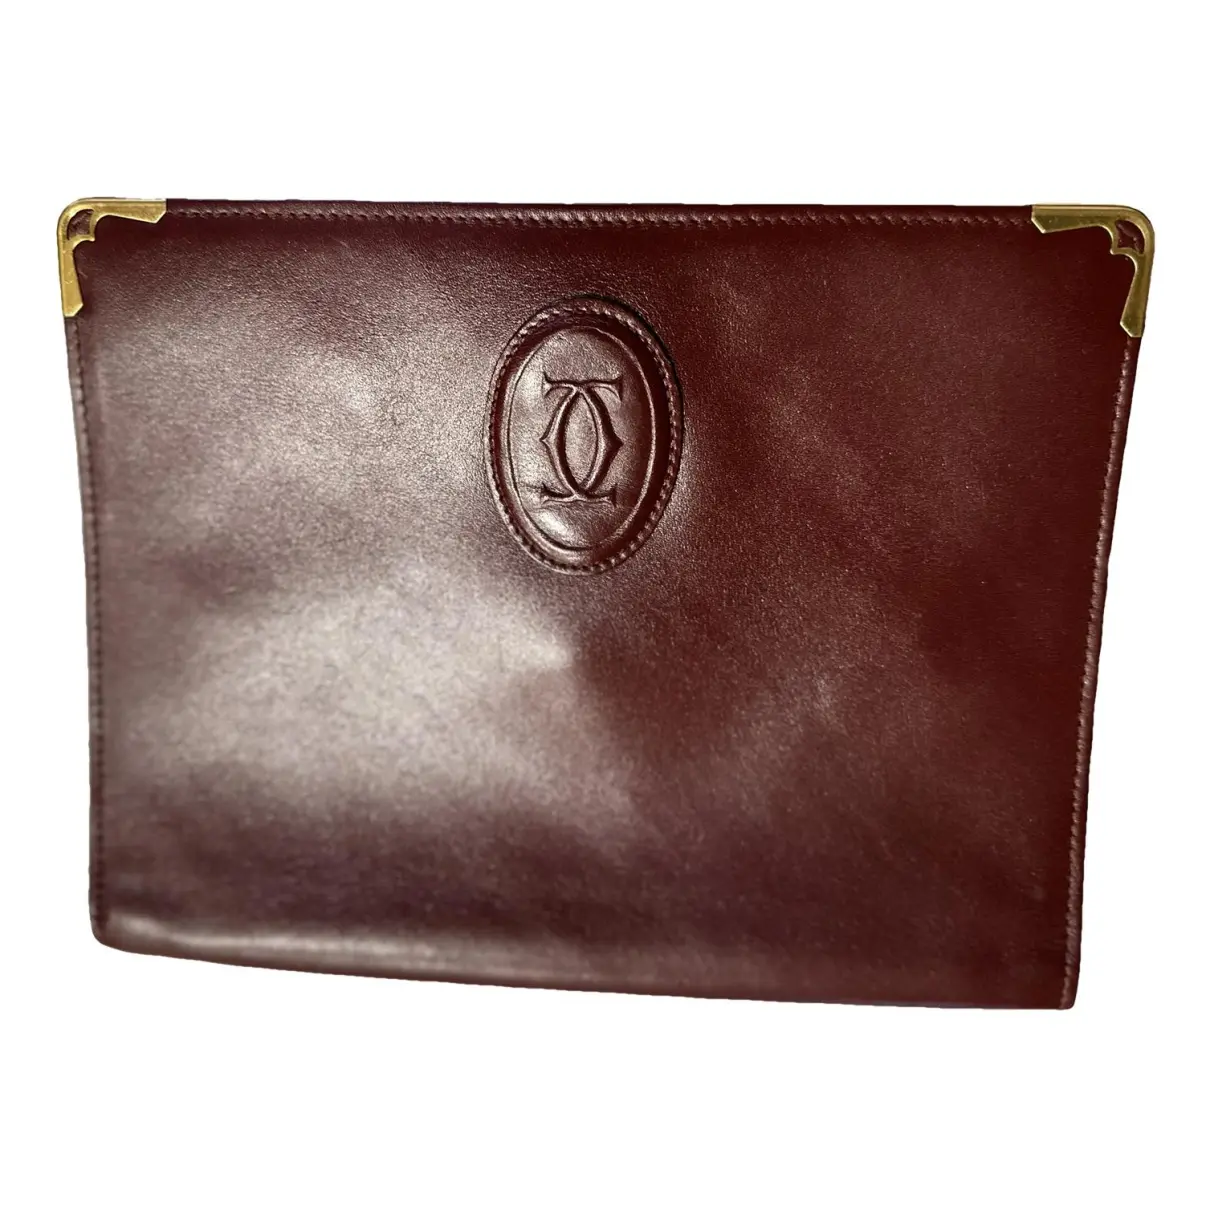 Marcello leather clutch bag Cartier - Vintage